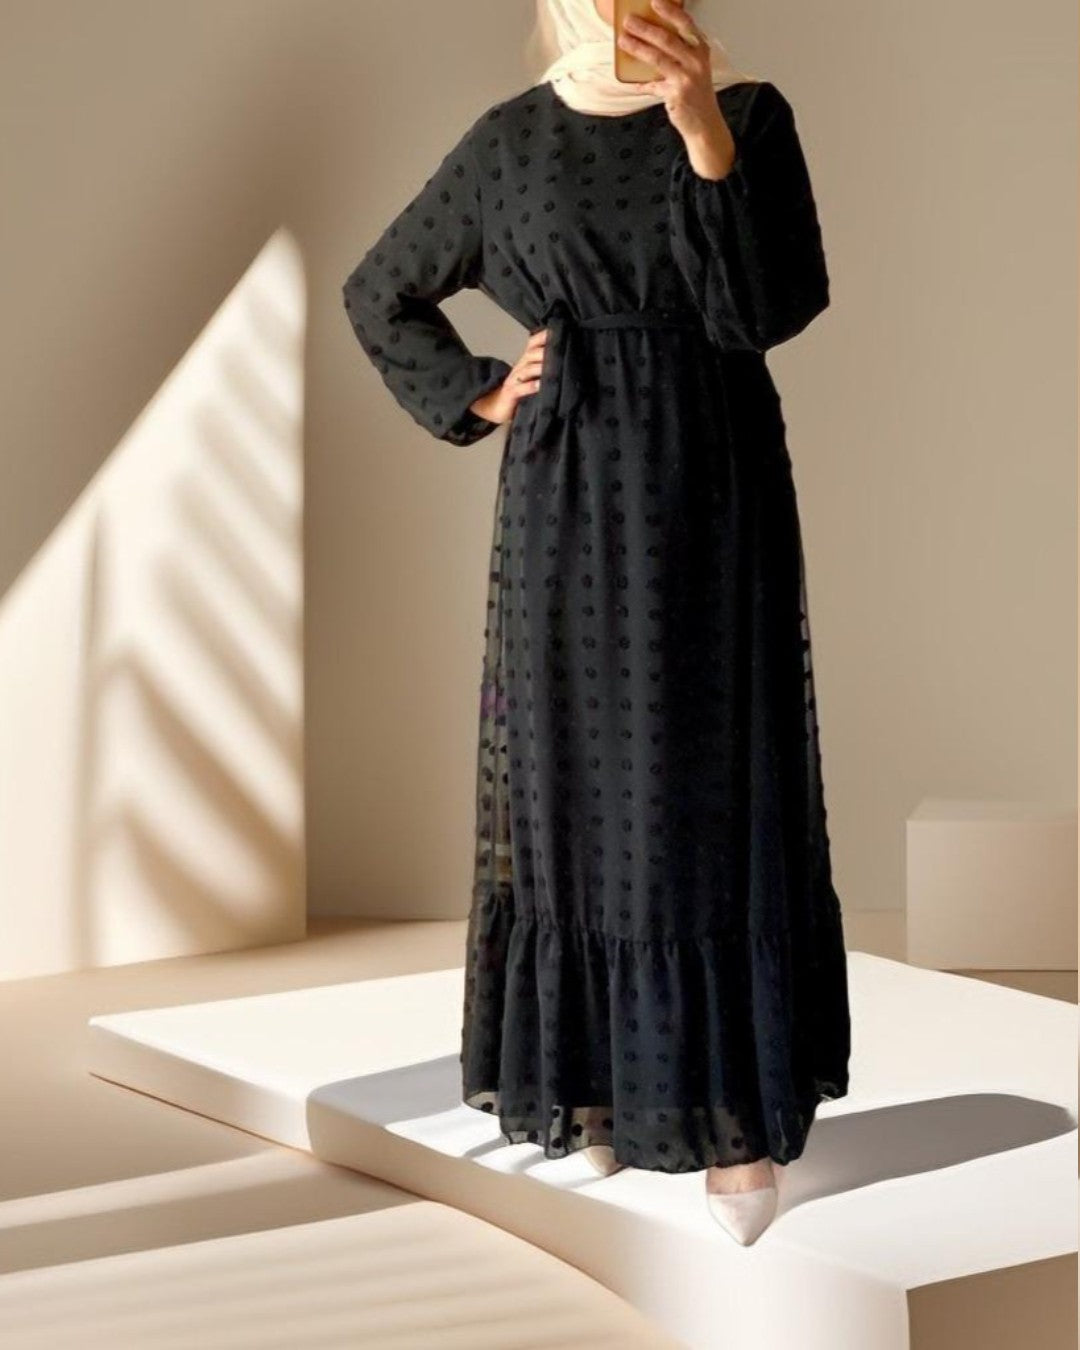 Arabian Women's Gown-full sleeve maxi dress - Try Modest Limited 